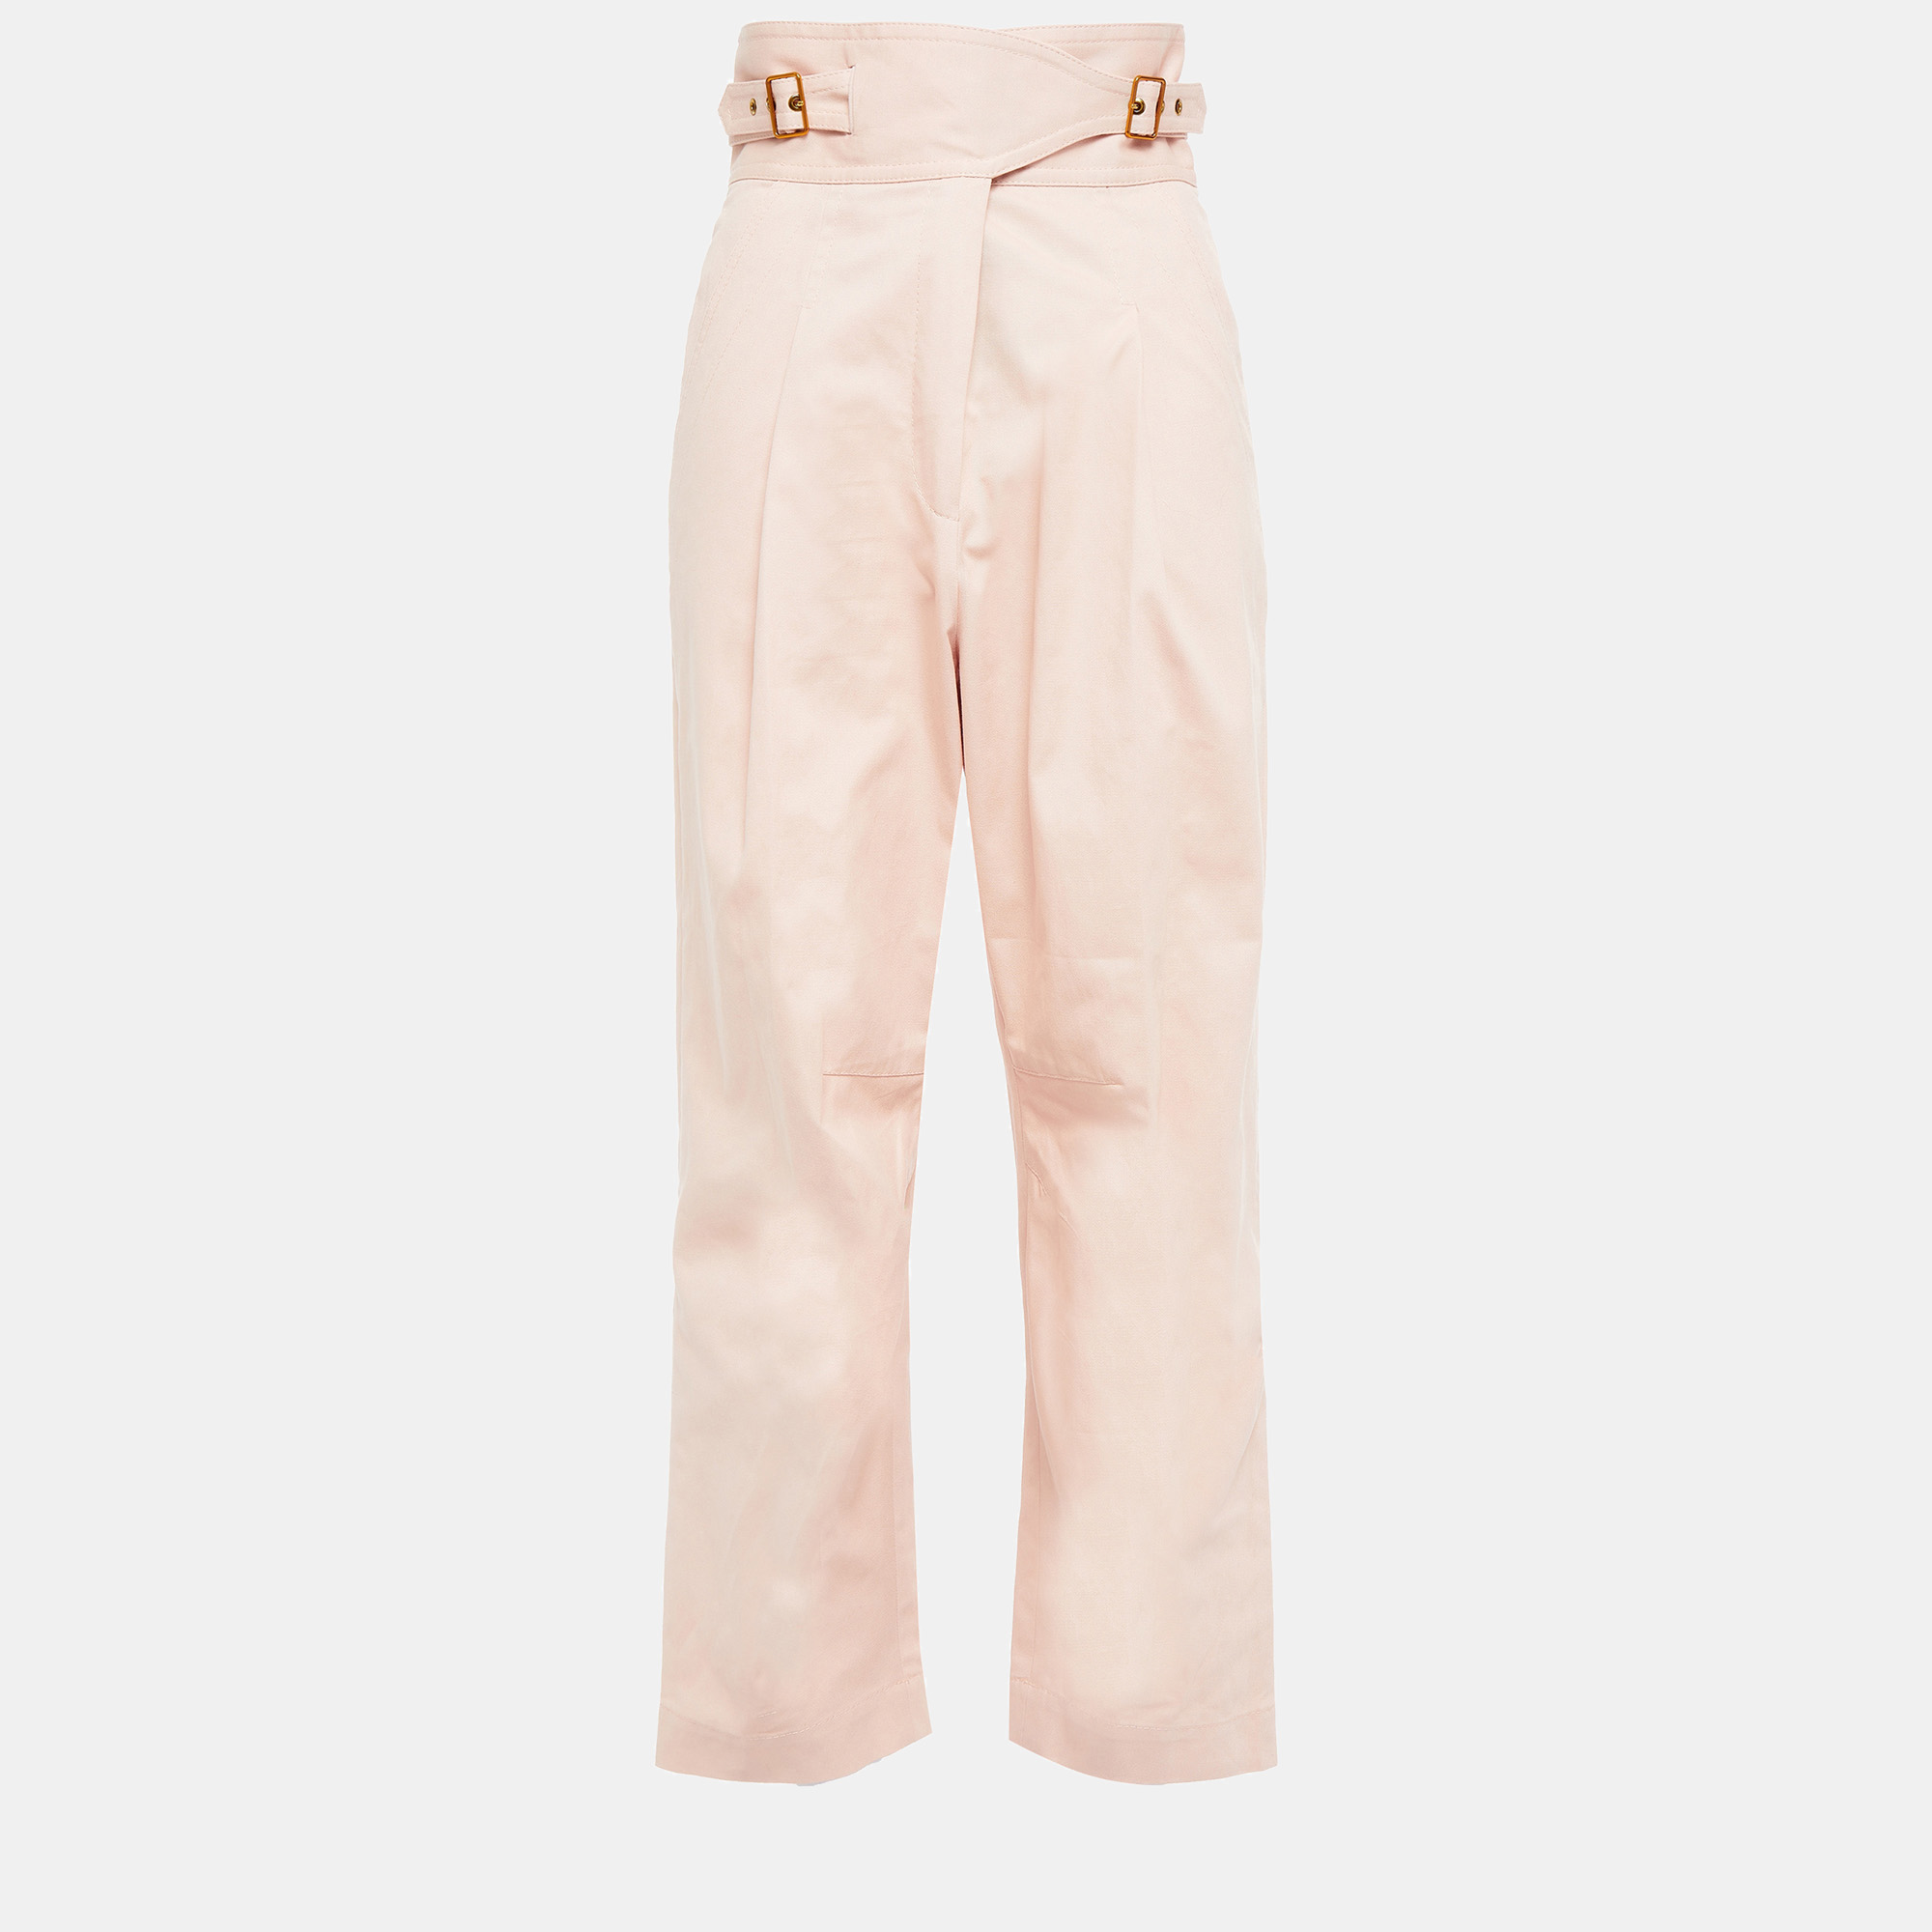 Zimmermann pink gabardine buckle pants size m (2)